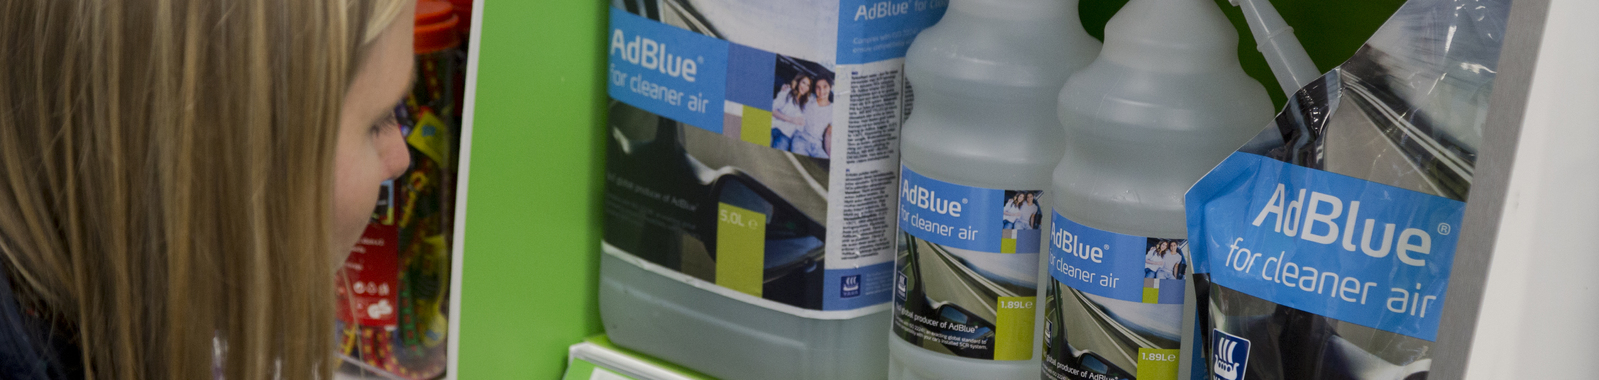 woman taking an AdBlue refill from a shop shelf